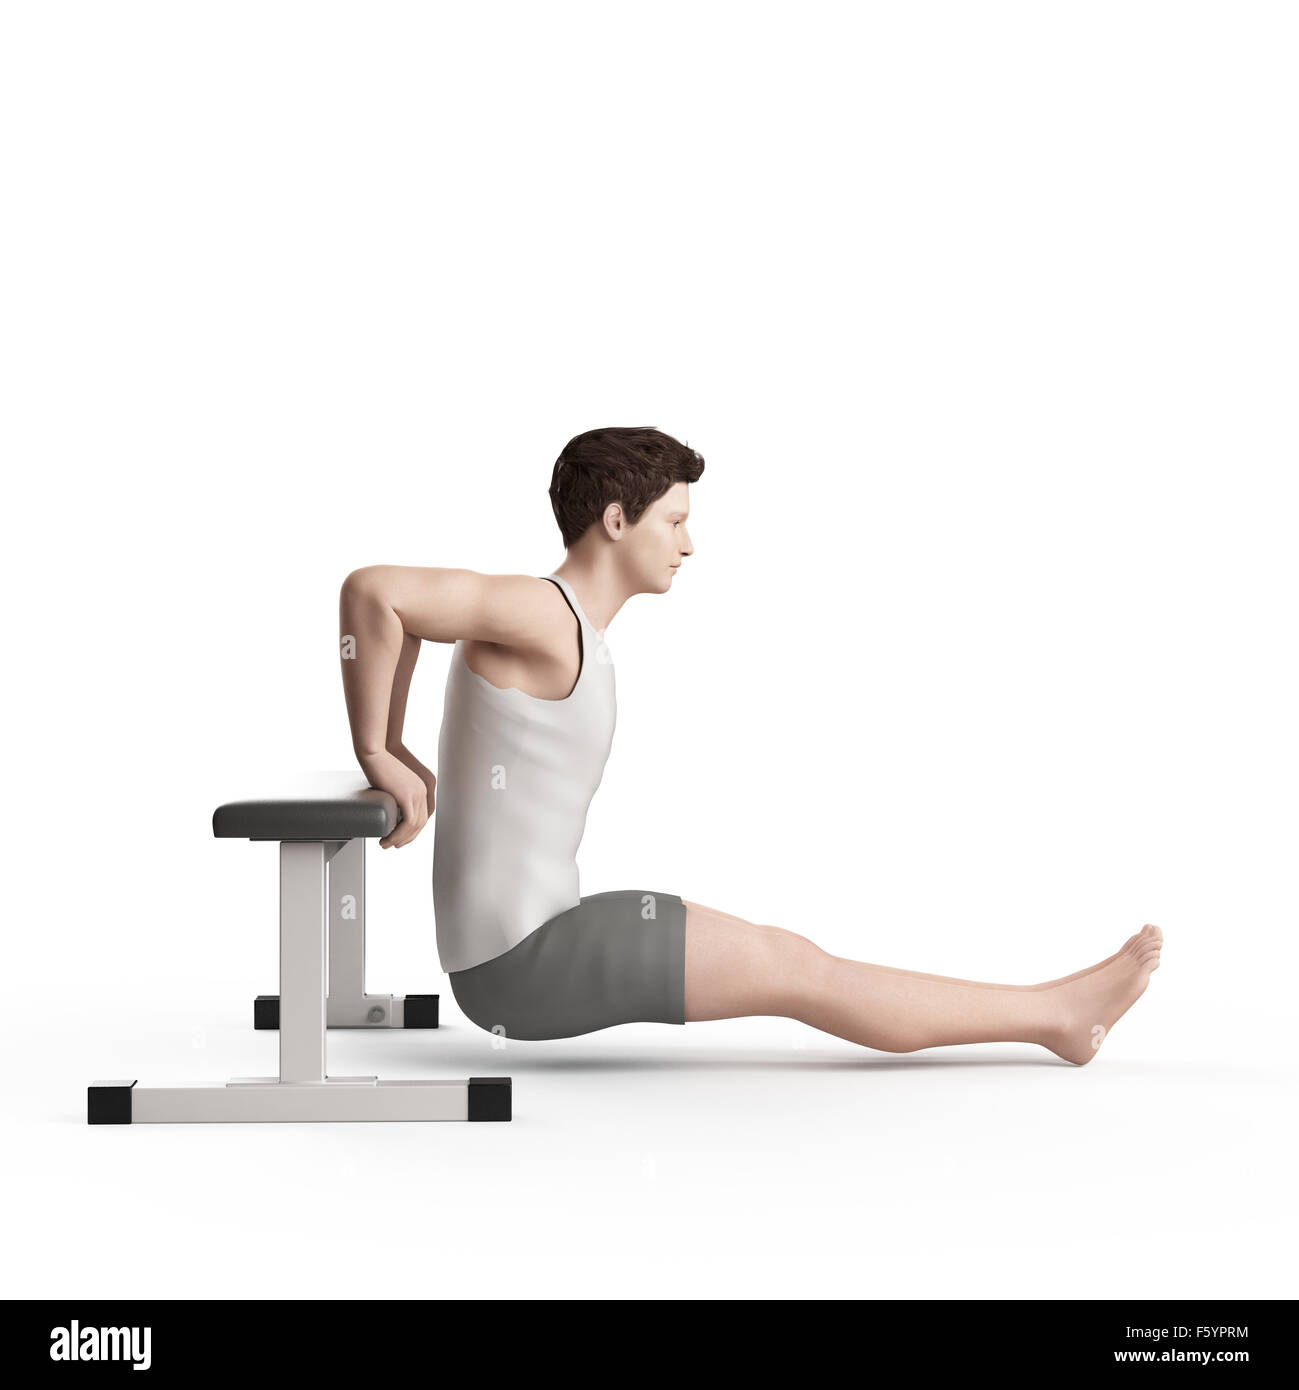 exercise illustration - bench dip Stock Photo